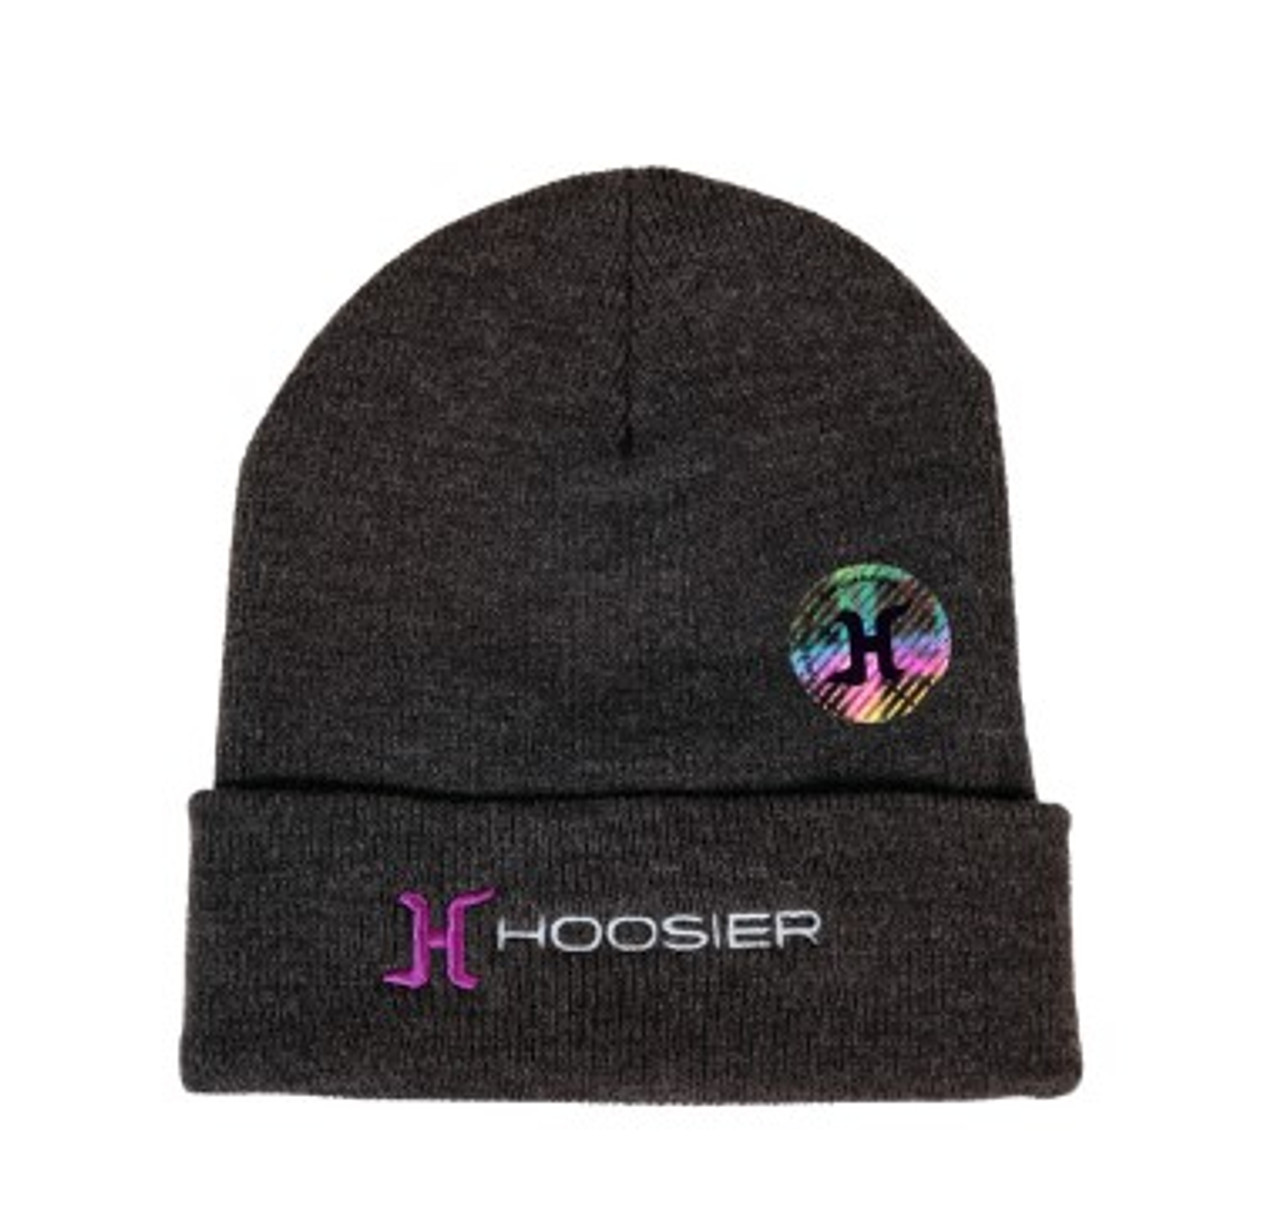 Hoosier Beanie Hats